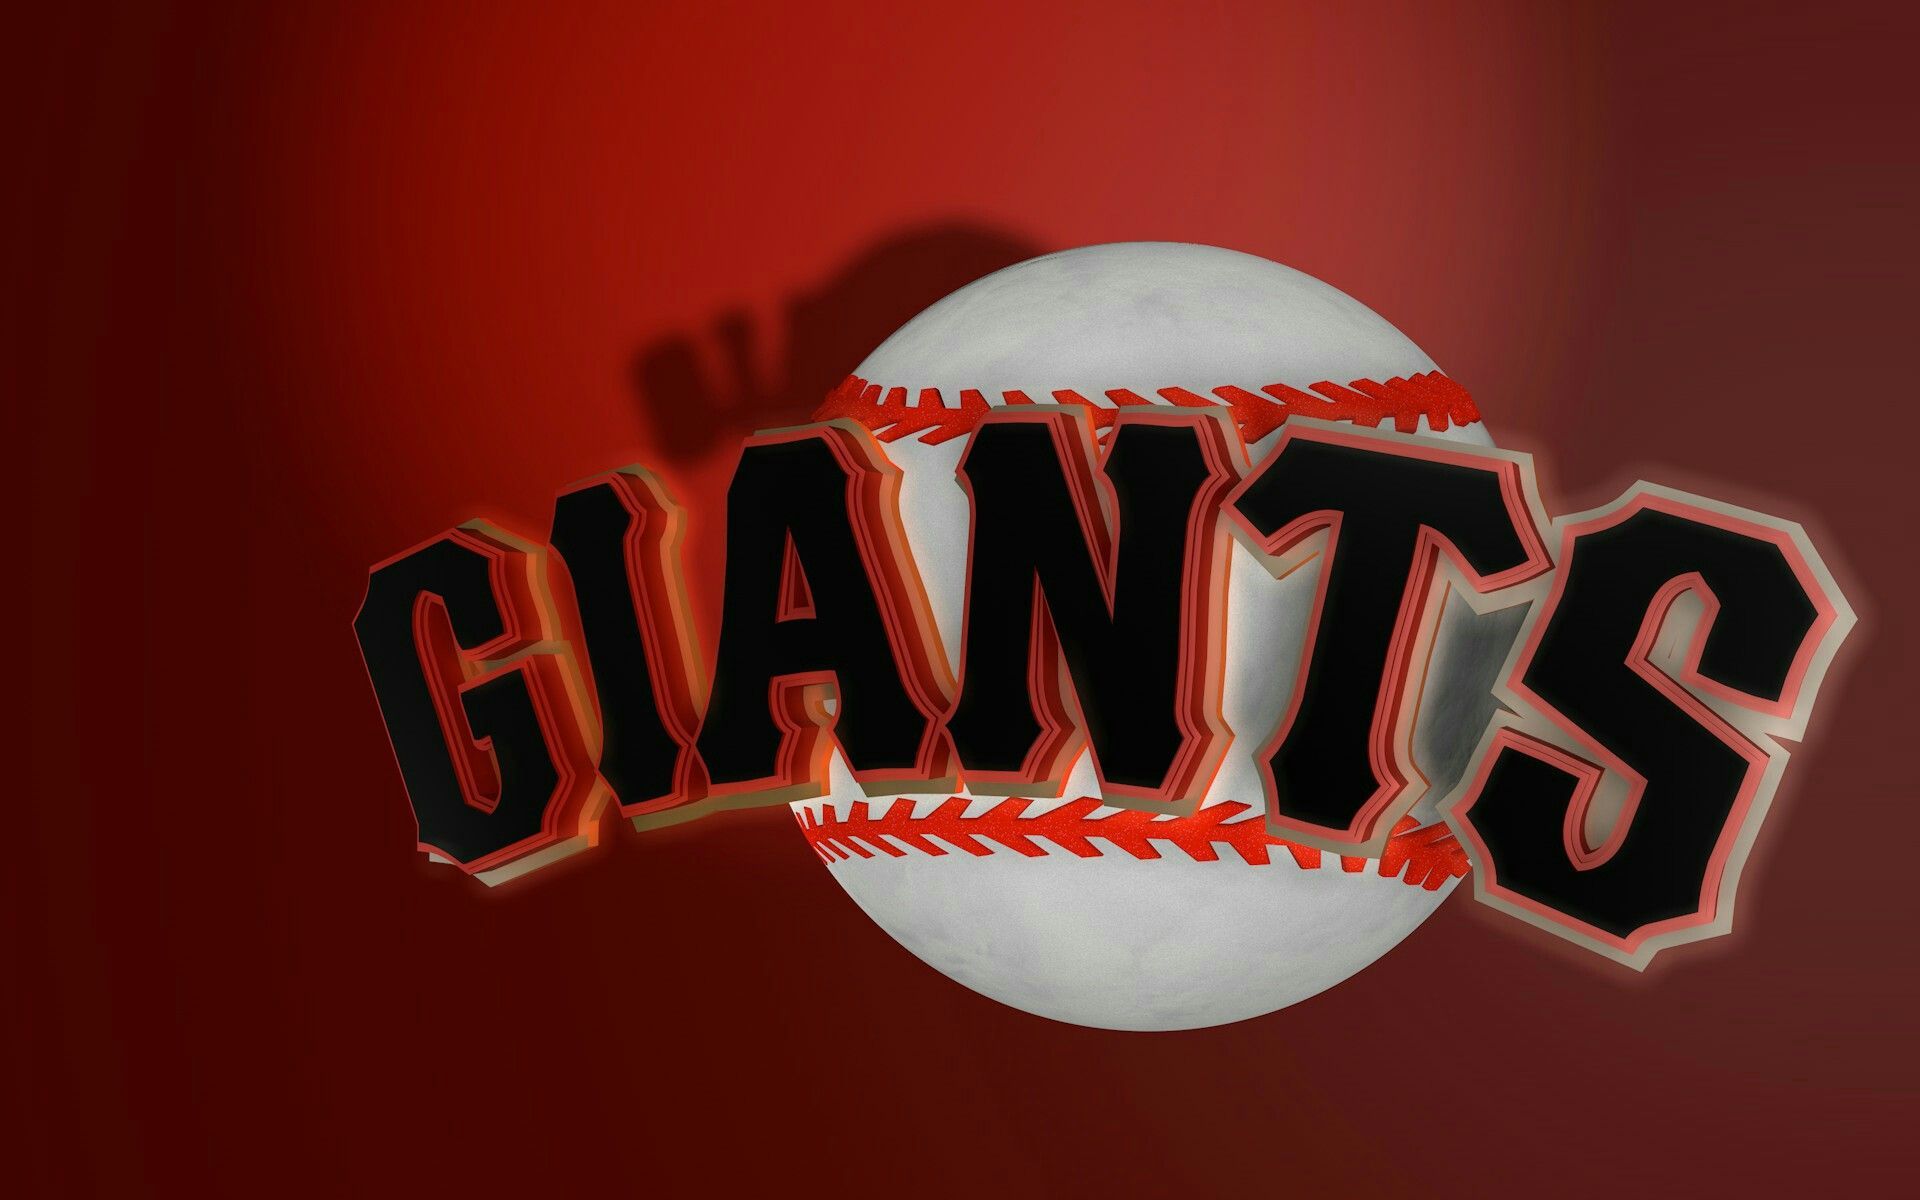 Giants baseball. San francisco giants logo, Giants tickets